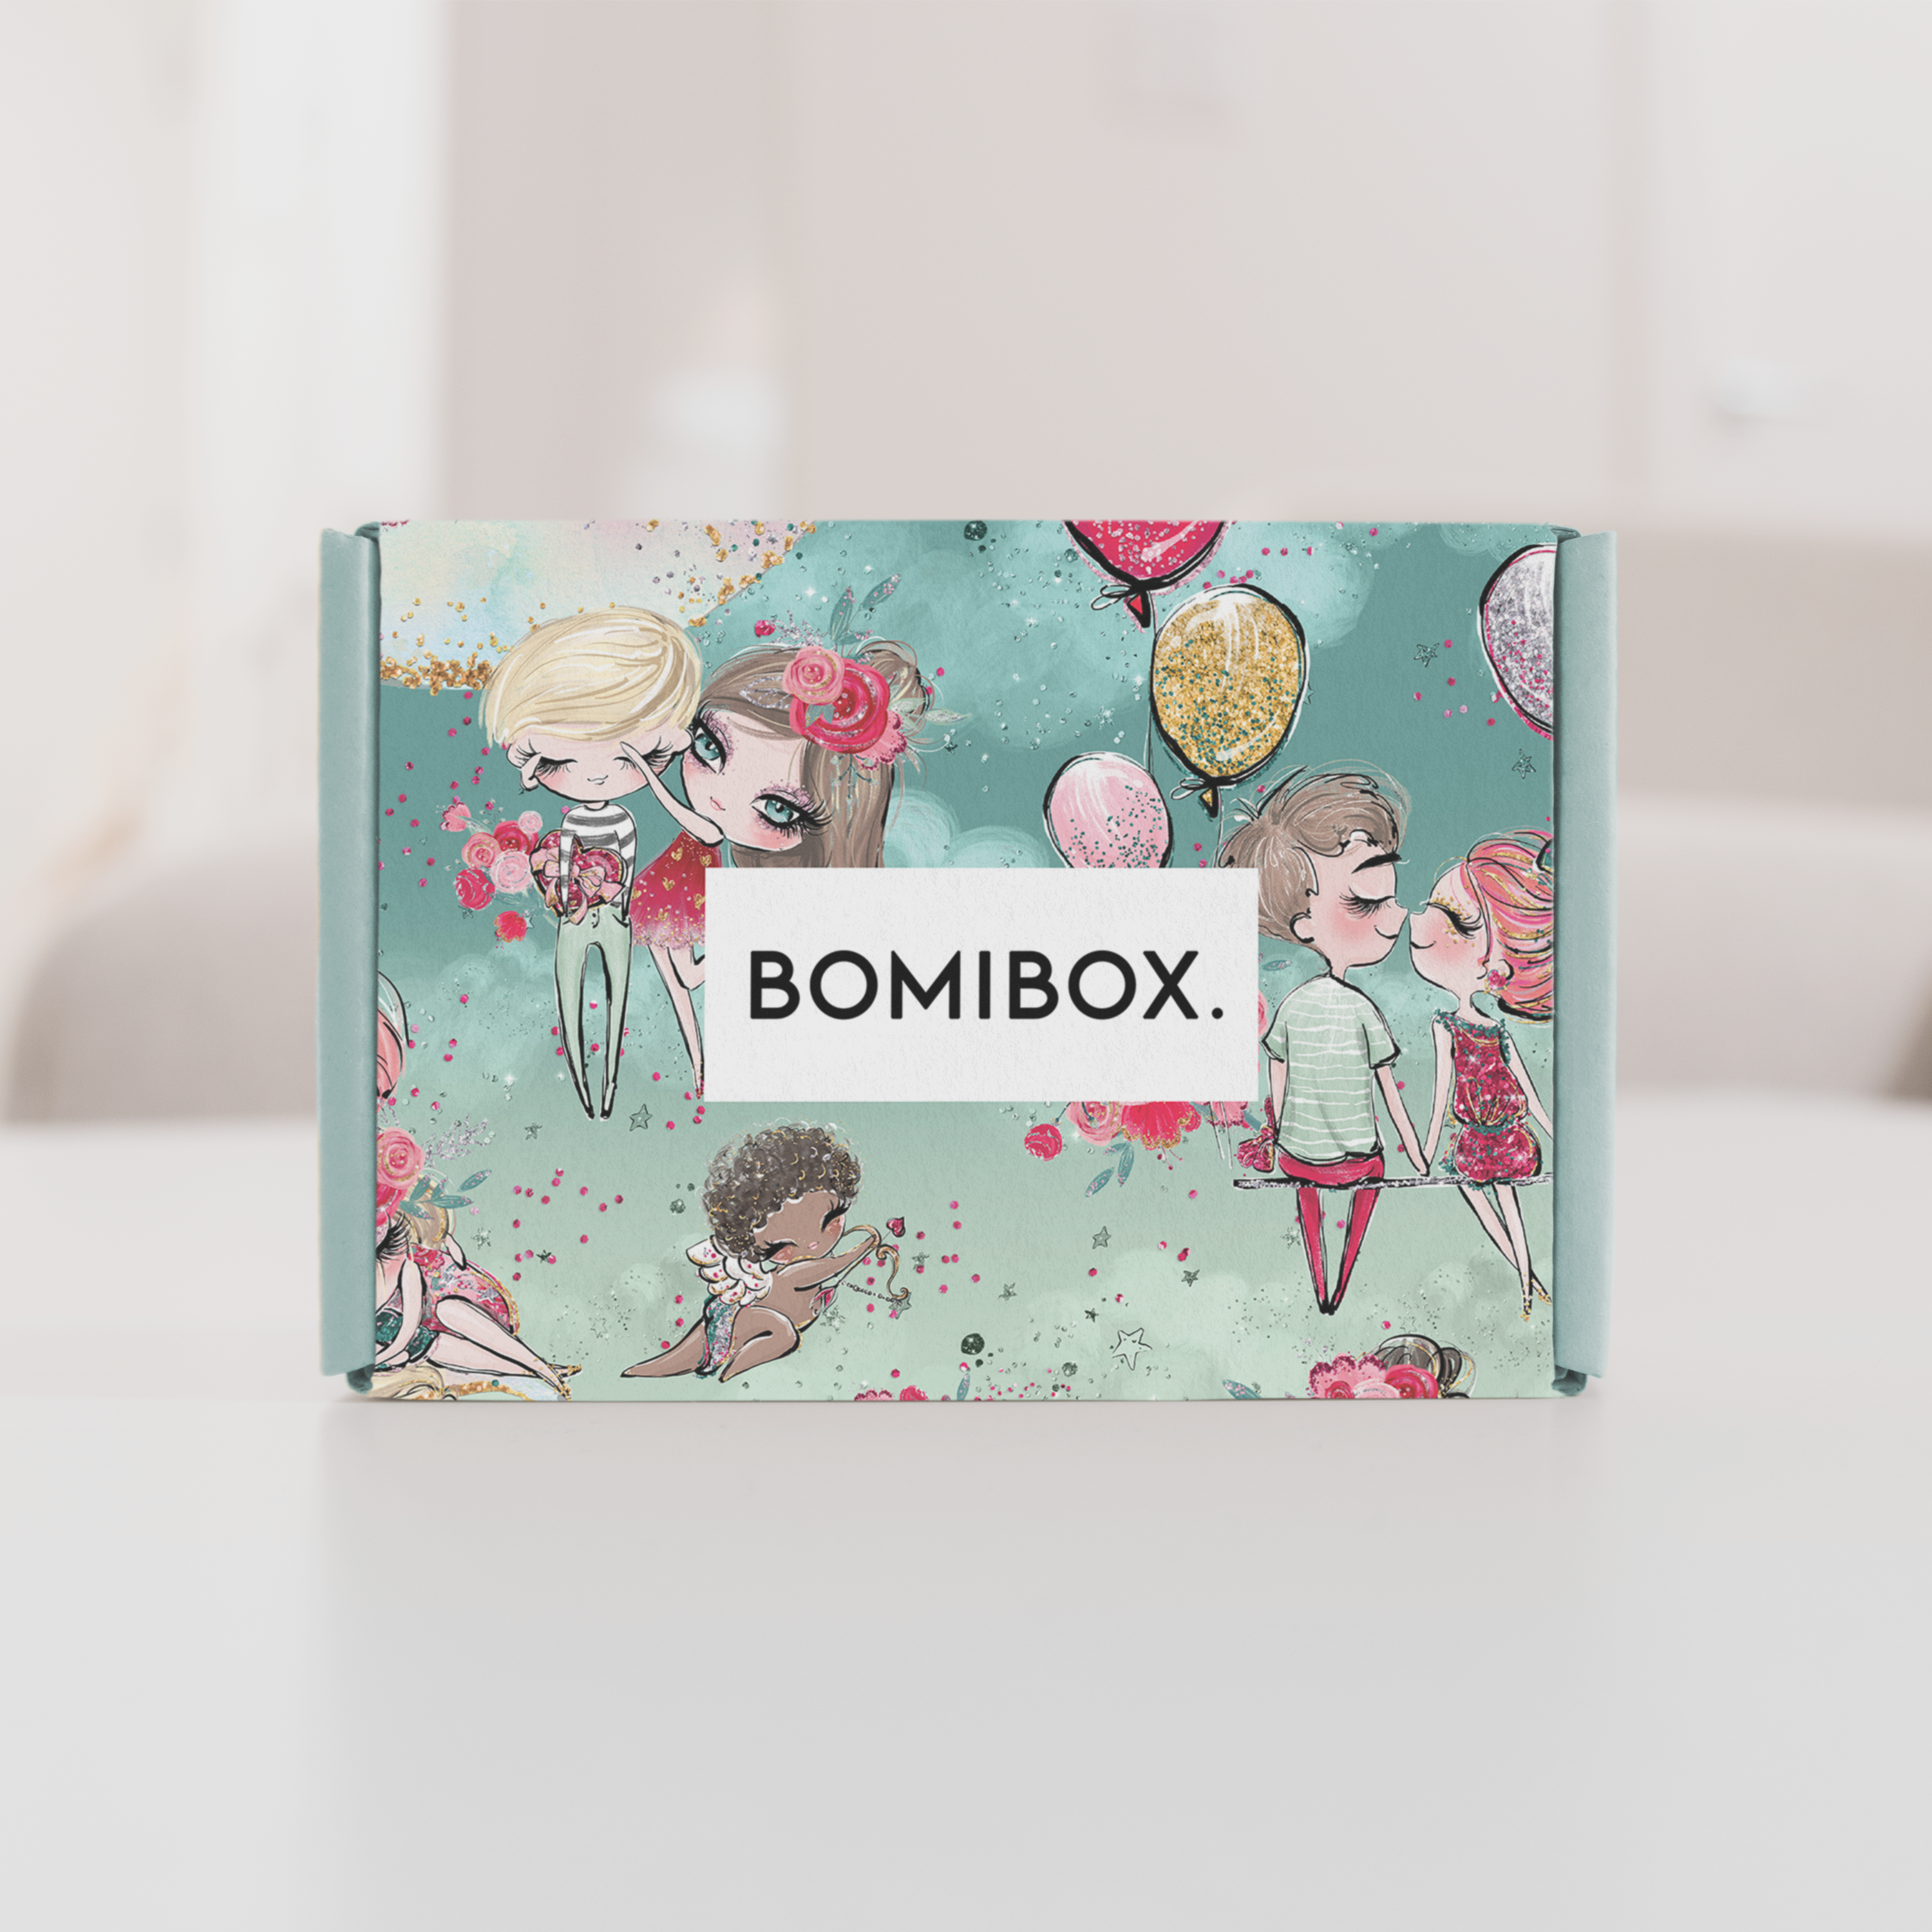 Past Boxes-Bomibox January 2020 - Korean Beauty Box Monthly Korean Skincare Subscription